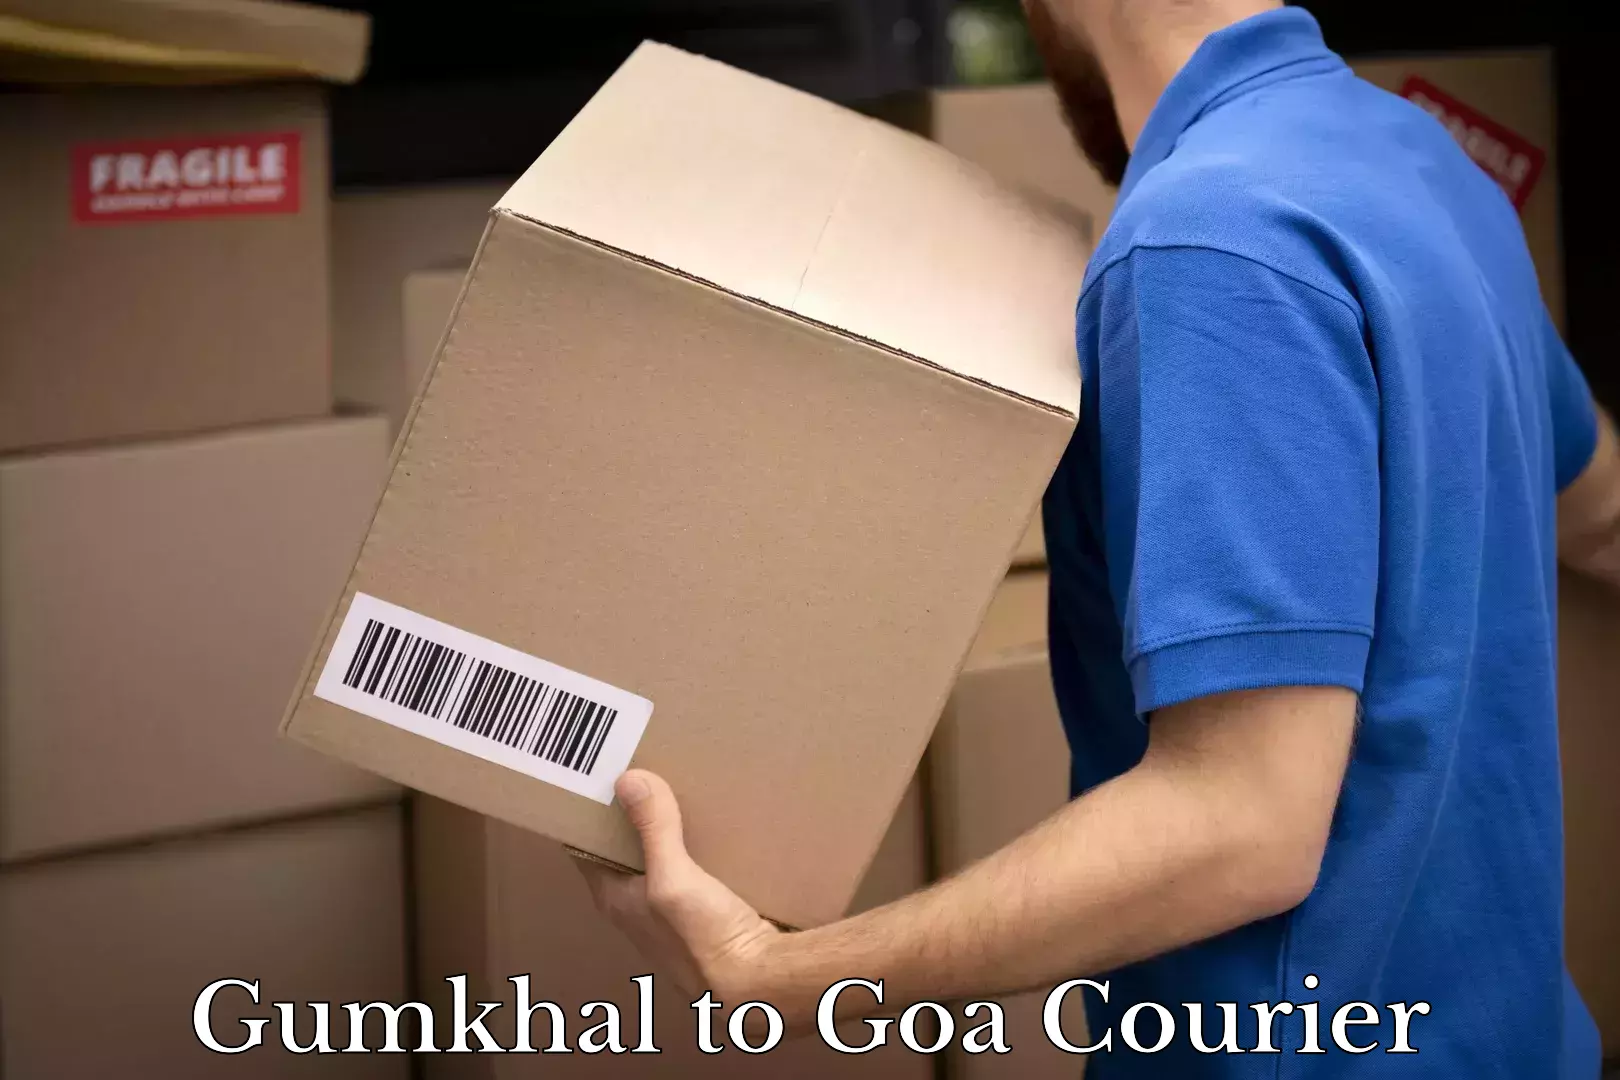 Customer-focused courier Gumkhal to Goa